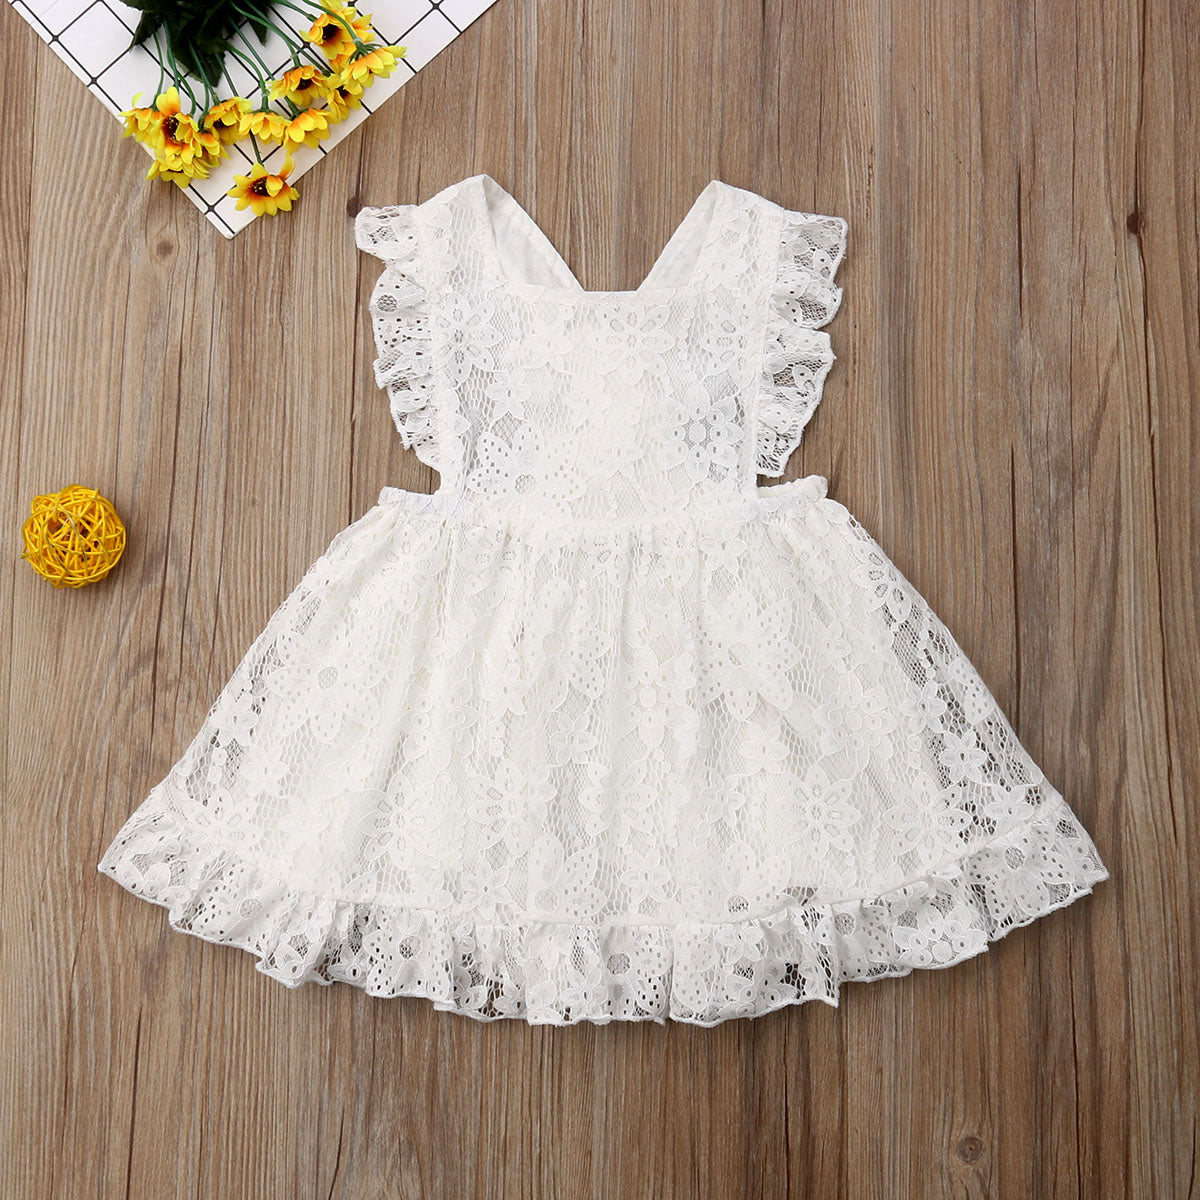 Toddler  Baby Girls White Lace  Ruffles Sleeve Party Wedding Princess Dress